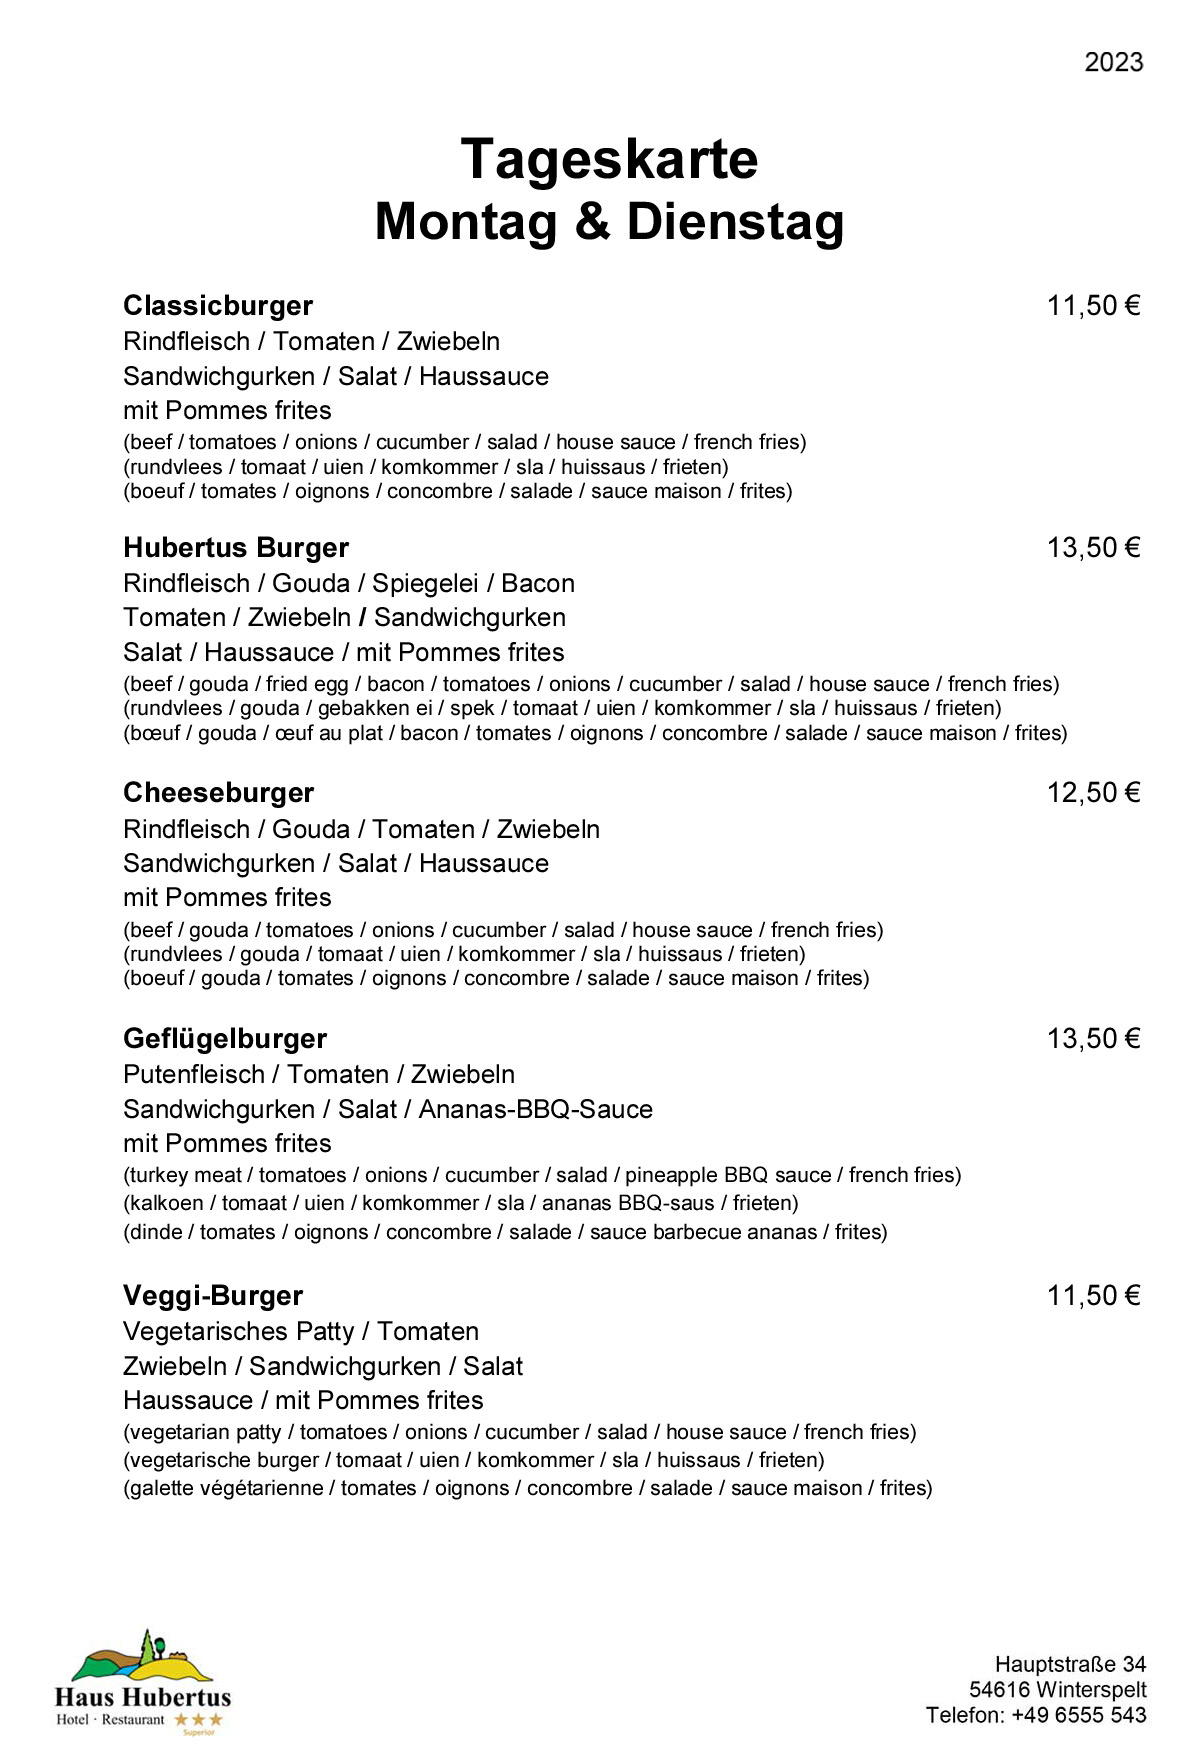 Hotel - Restaurant Haus Hubertus - Menu 02/2023 - Daily menu / Monday and Tuesday